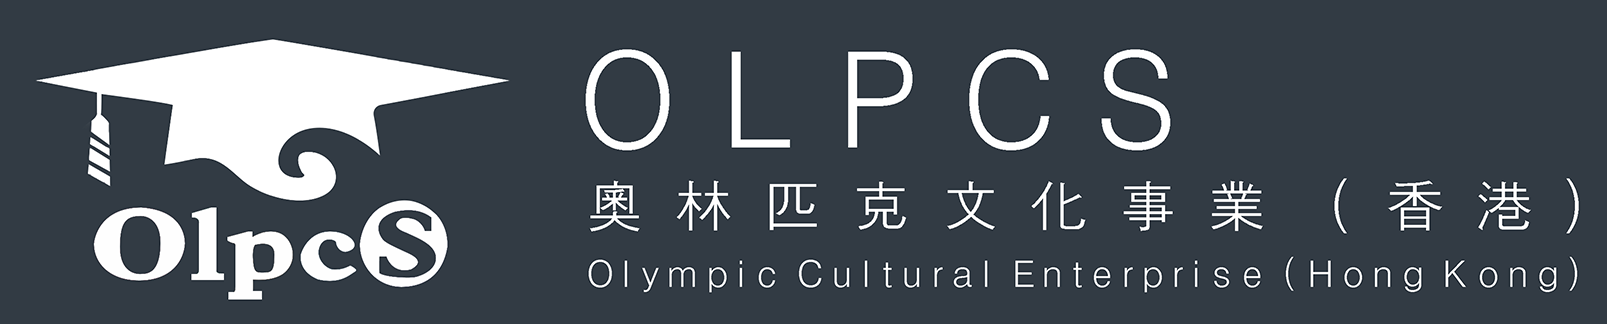 Olympic Cultural Enterprise（Hong Kong）